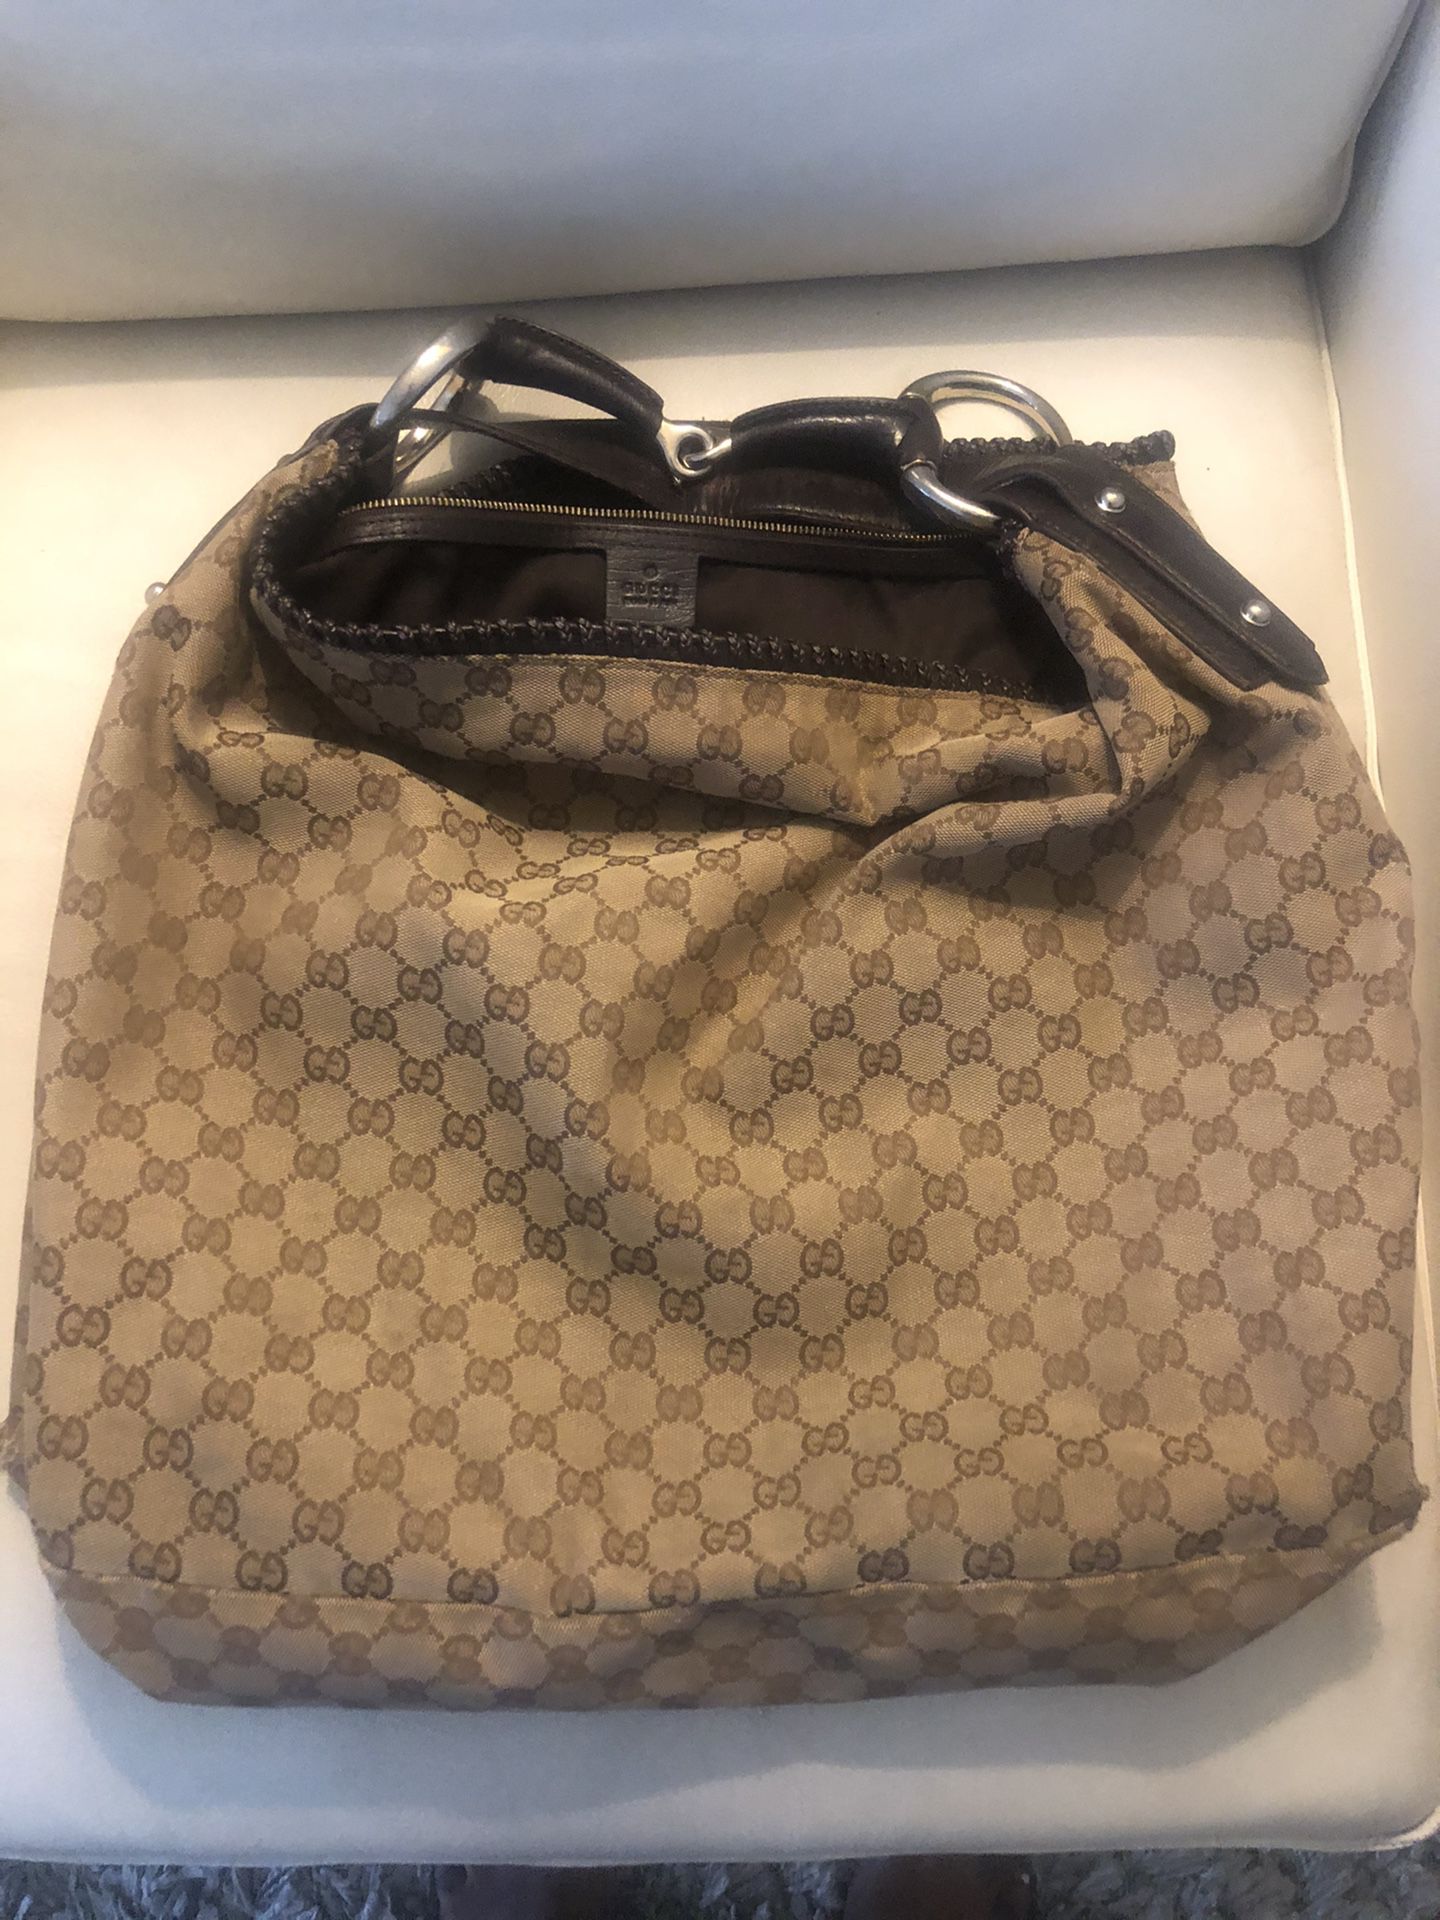 Authentic Gucci hobo handbag